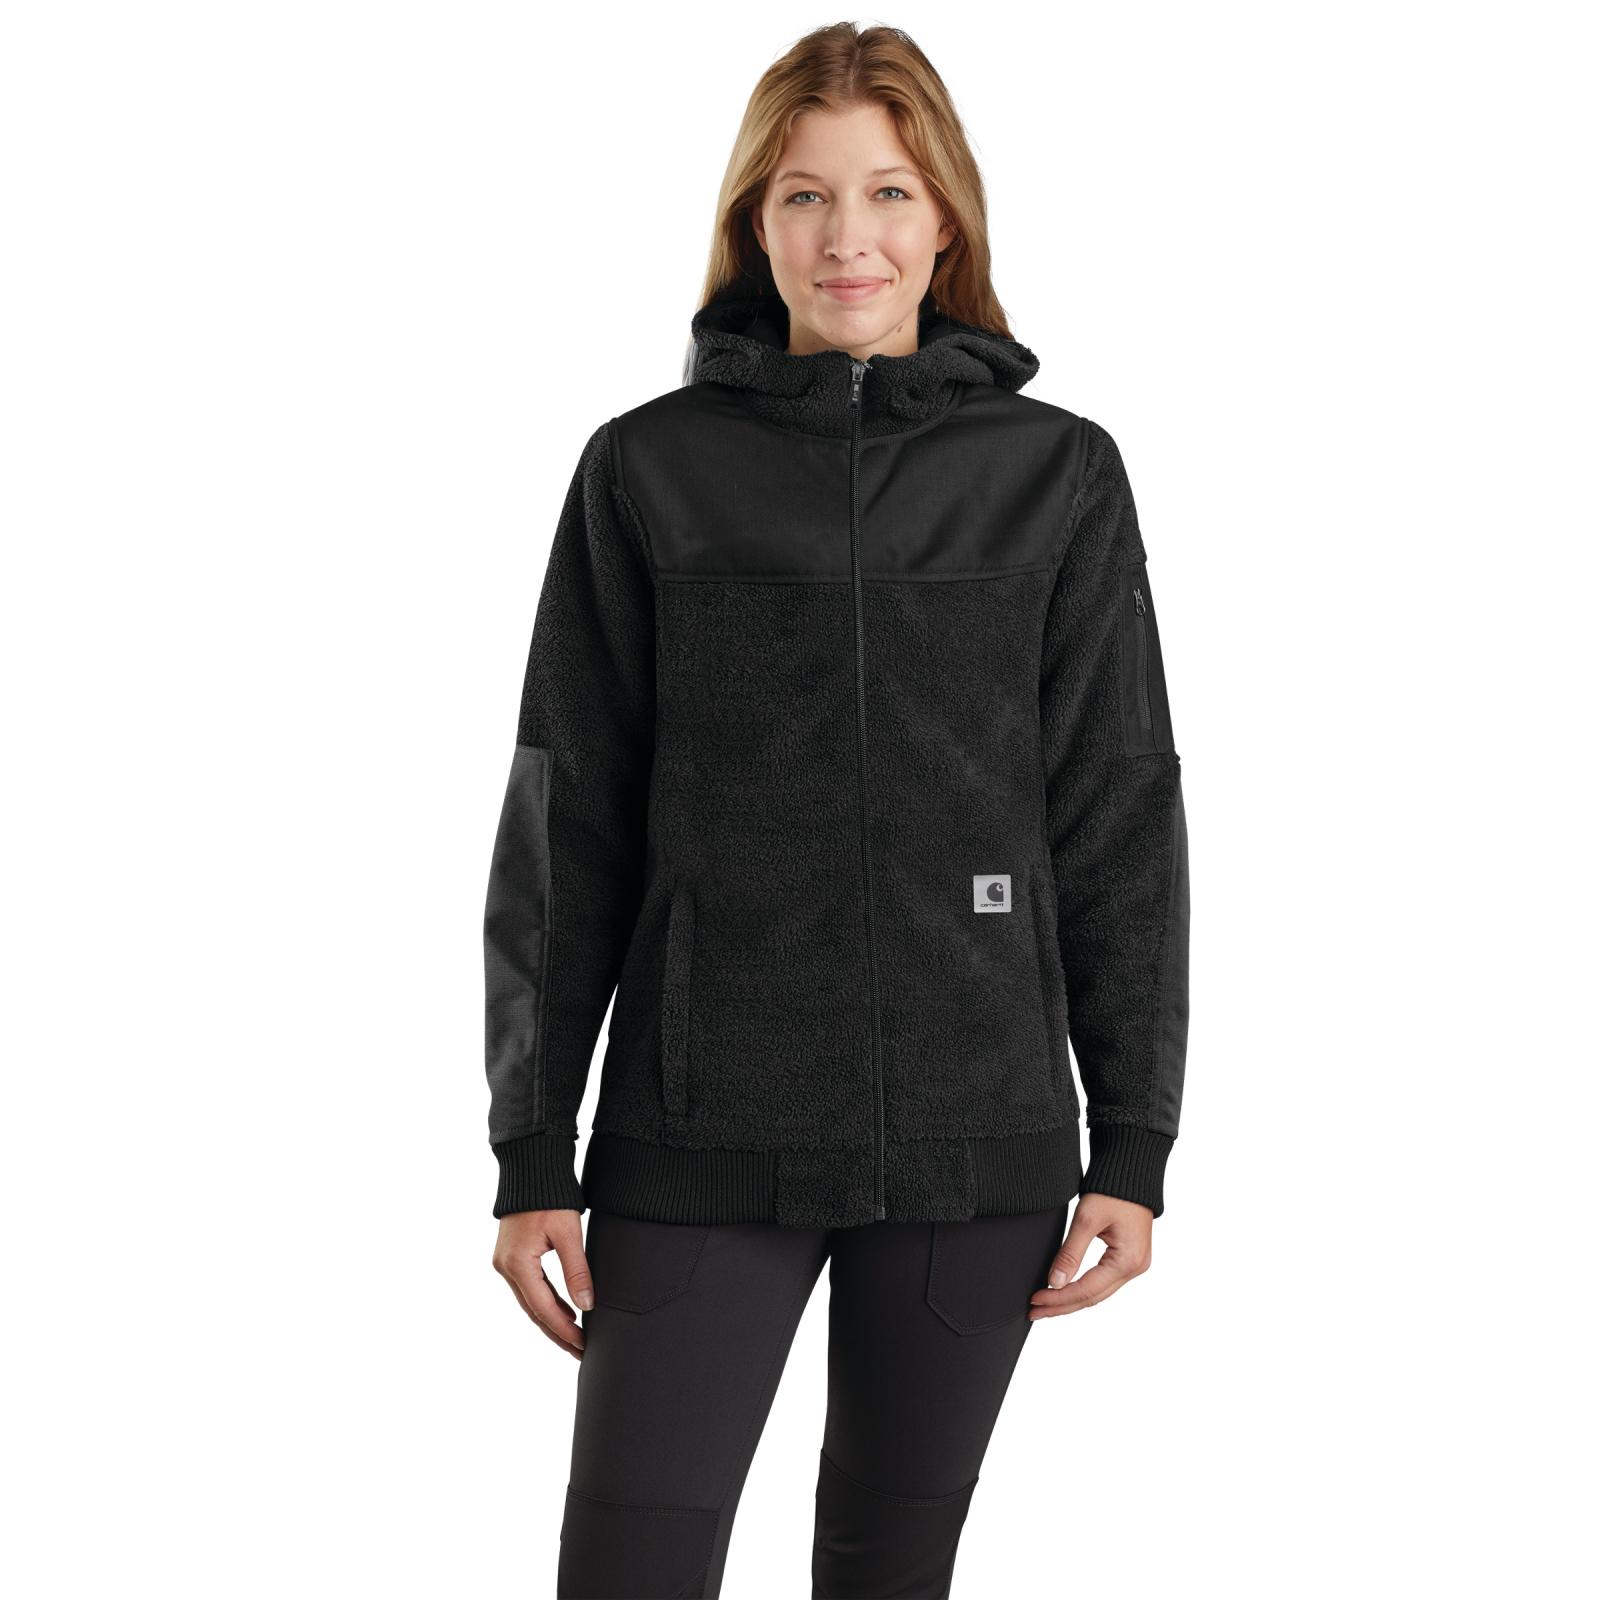 Carhartt Women's Yukon Extremes Wind Fighter Fleece Active Jacket